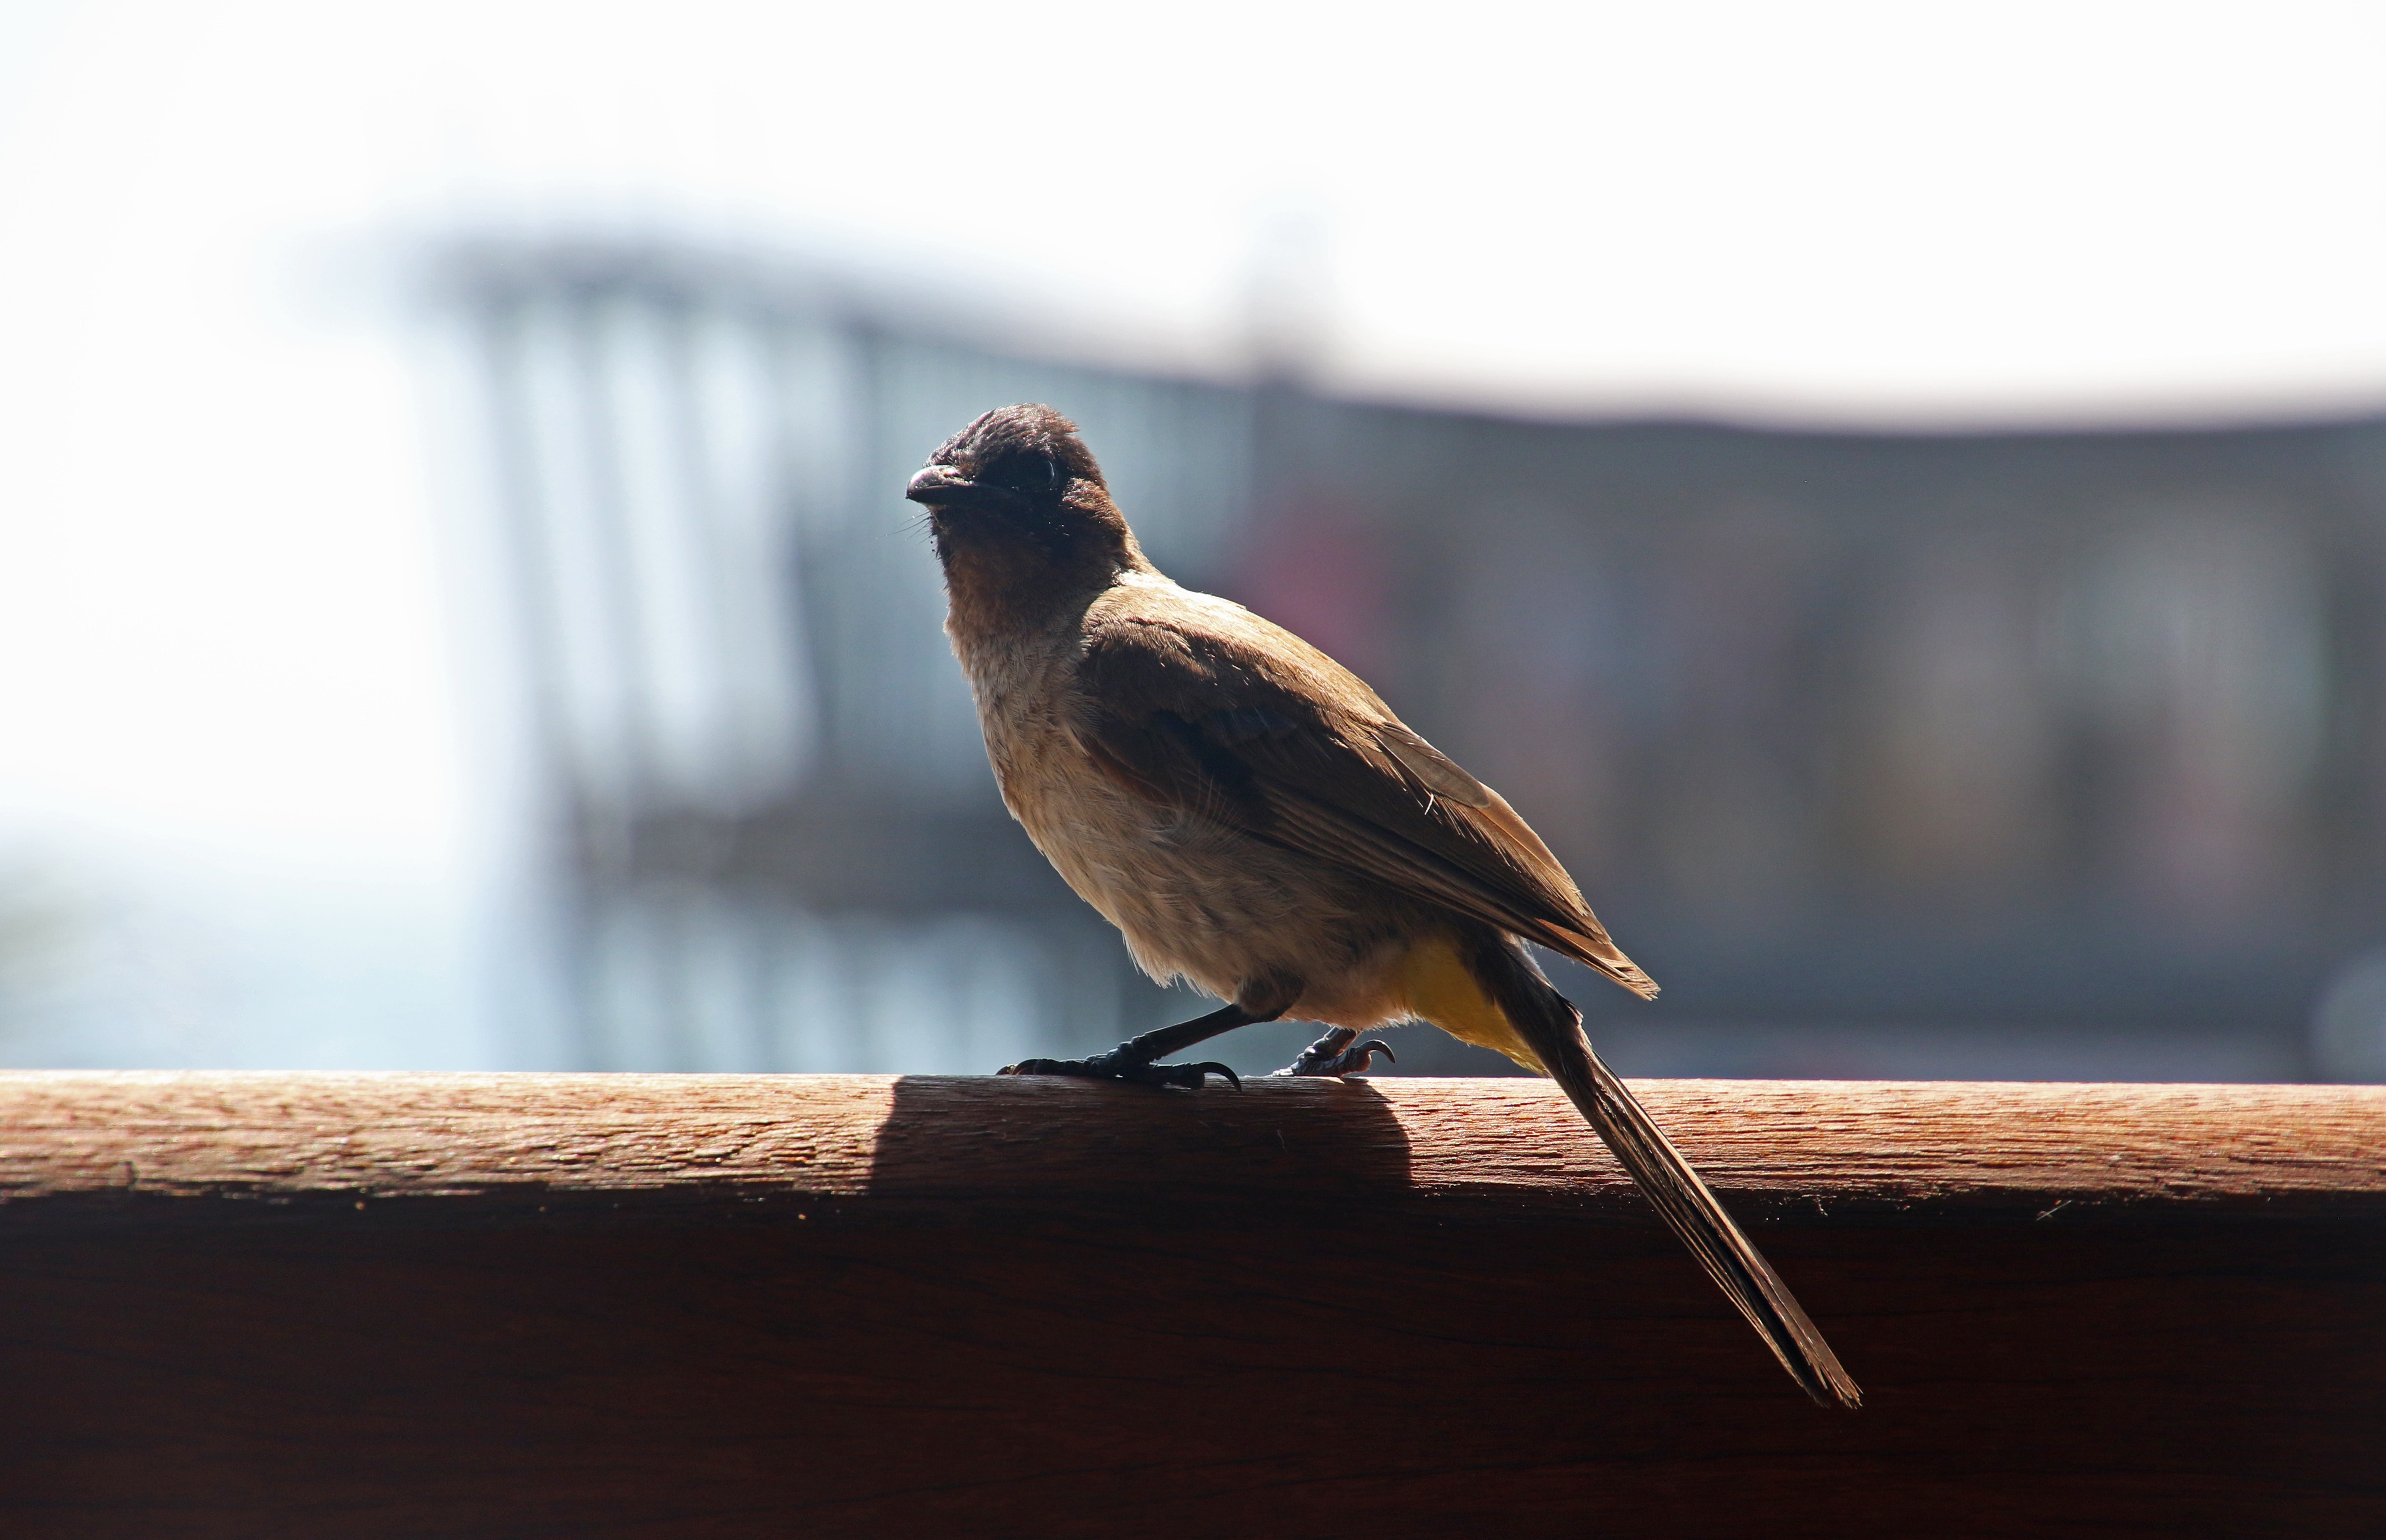 Small bird on the beach pier, Small bird on the beach pier